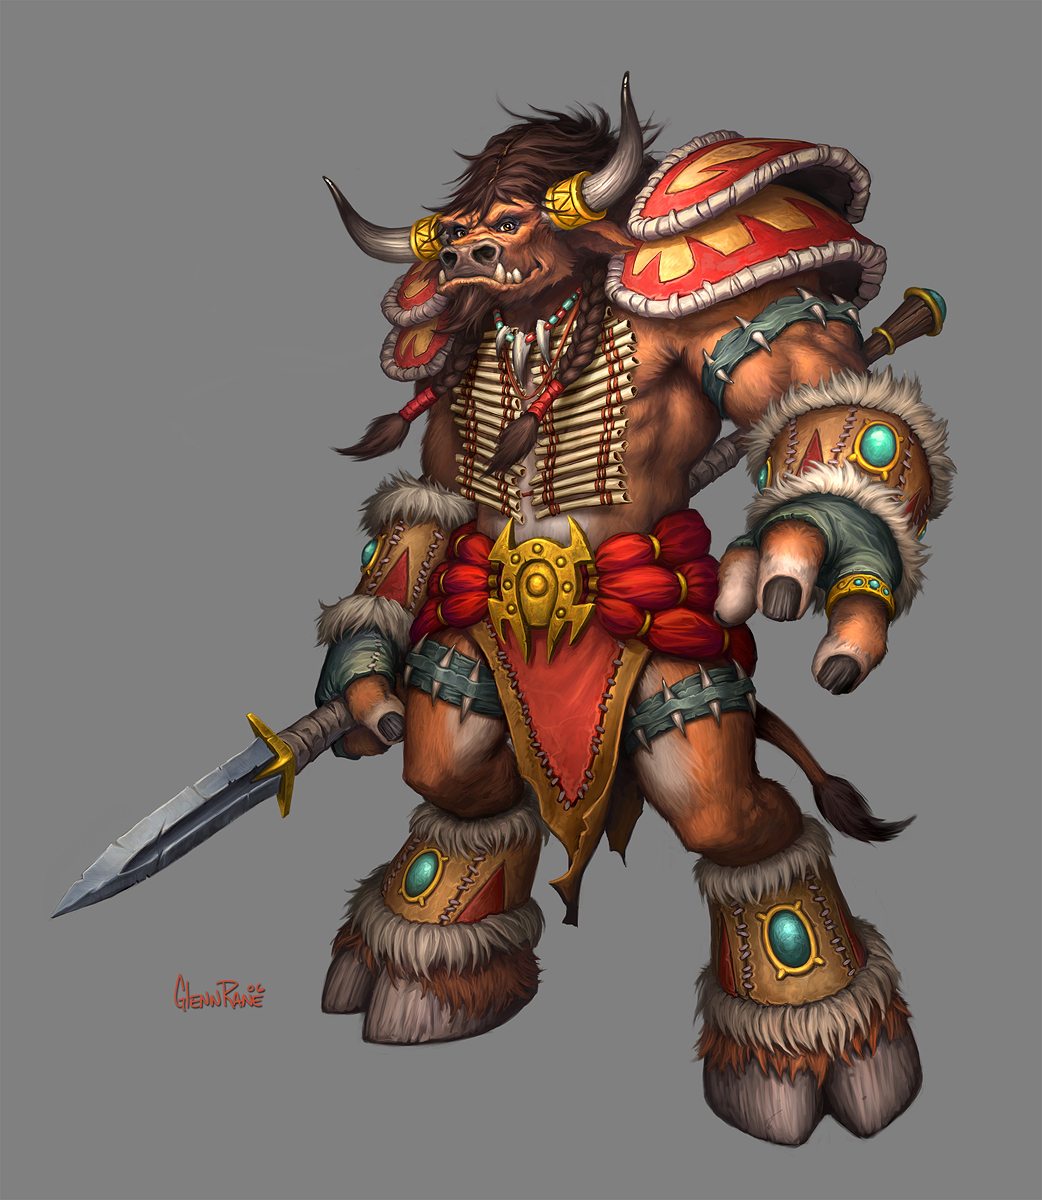 『World of Warcraft』に登場するTauren種族